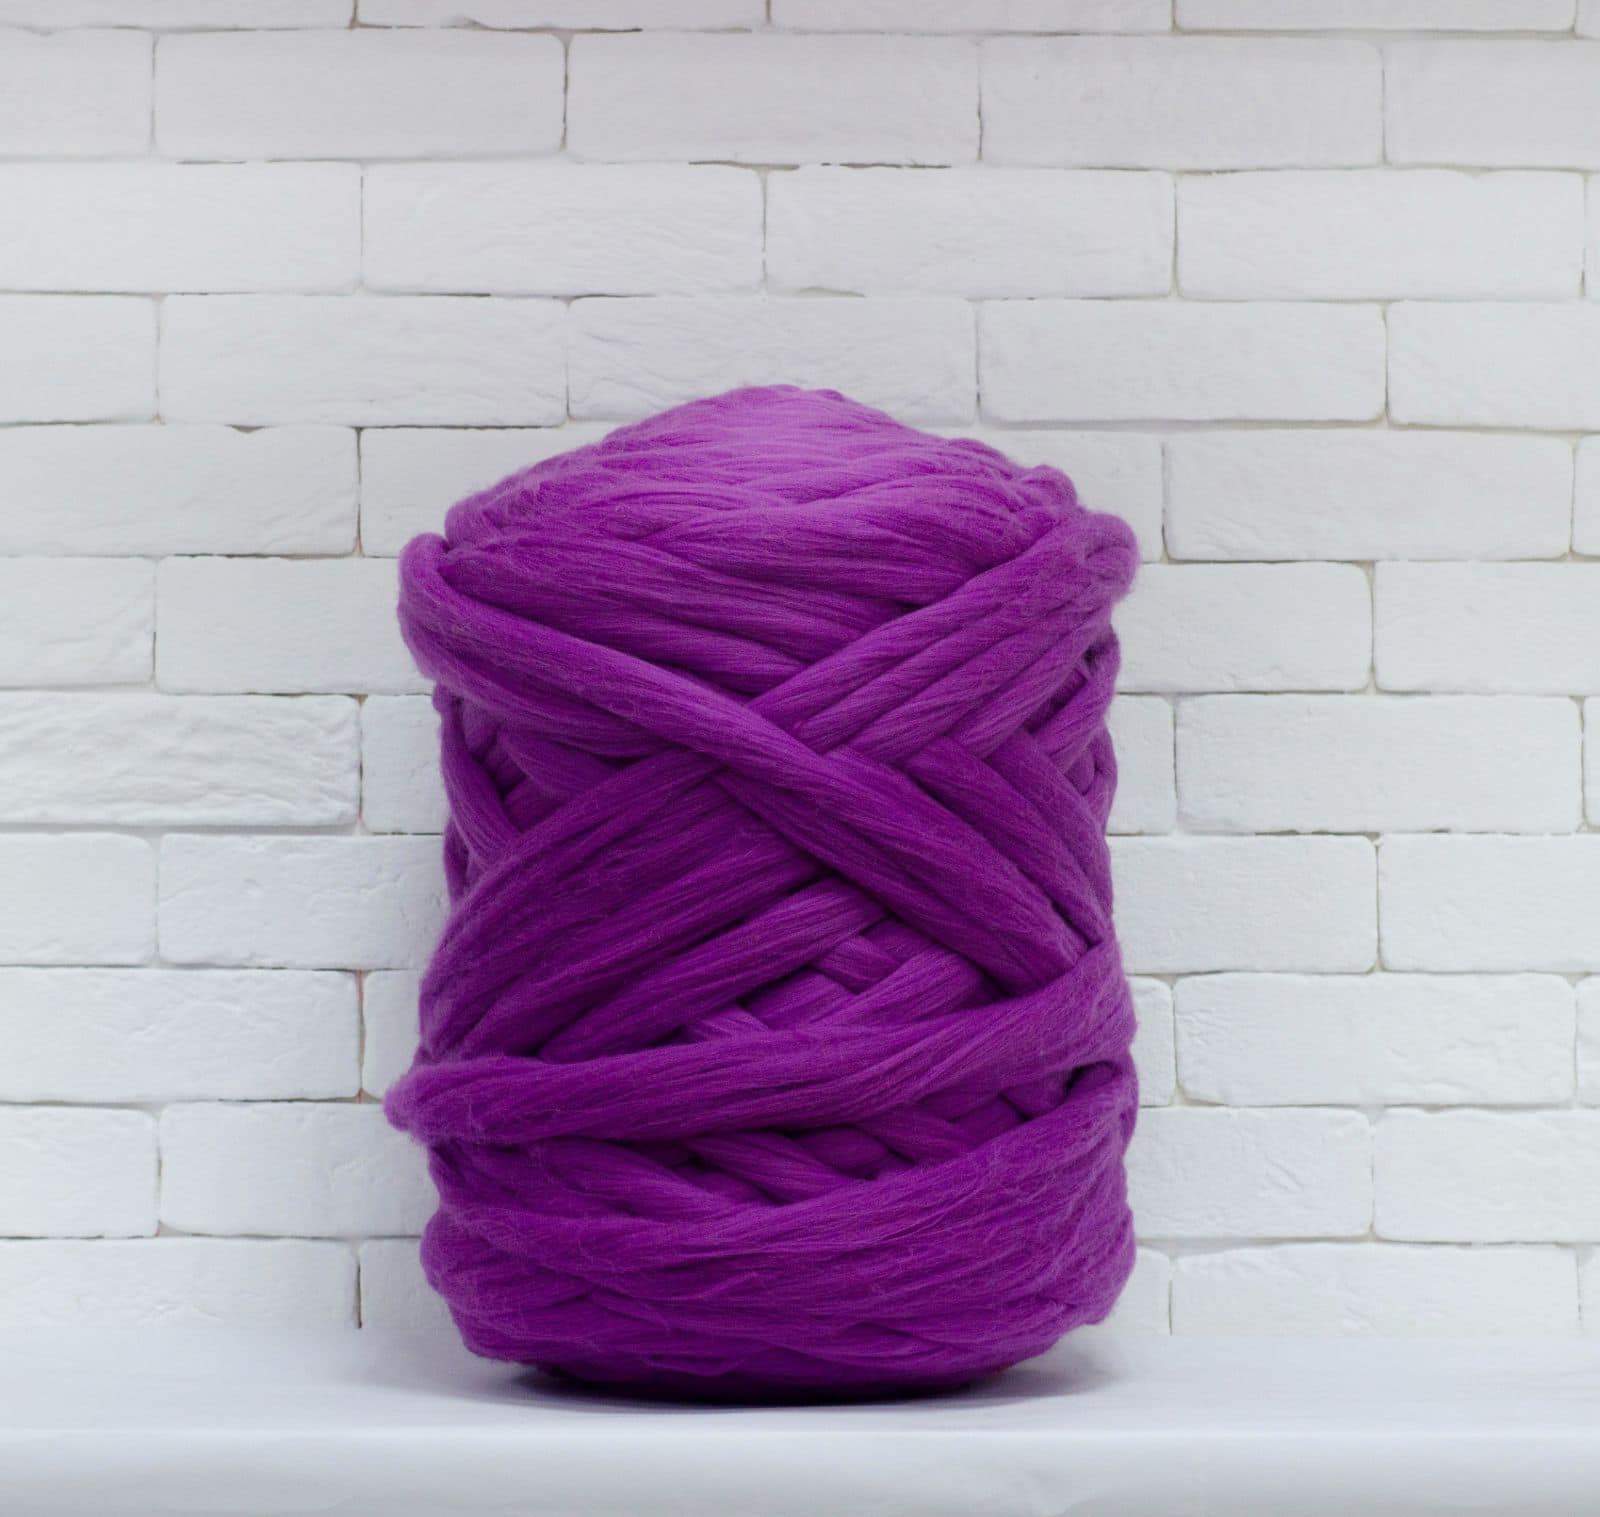 Giant Yarn | Chunky Yarn | 100% Merino Wool Yarn - Super Bulky Yarn